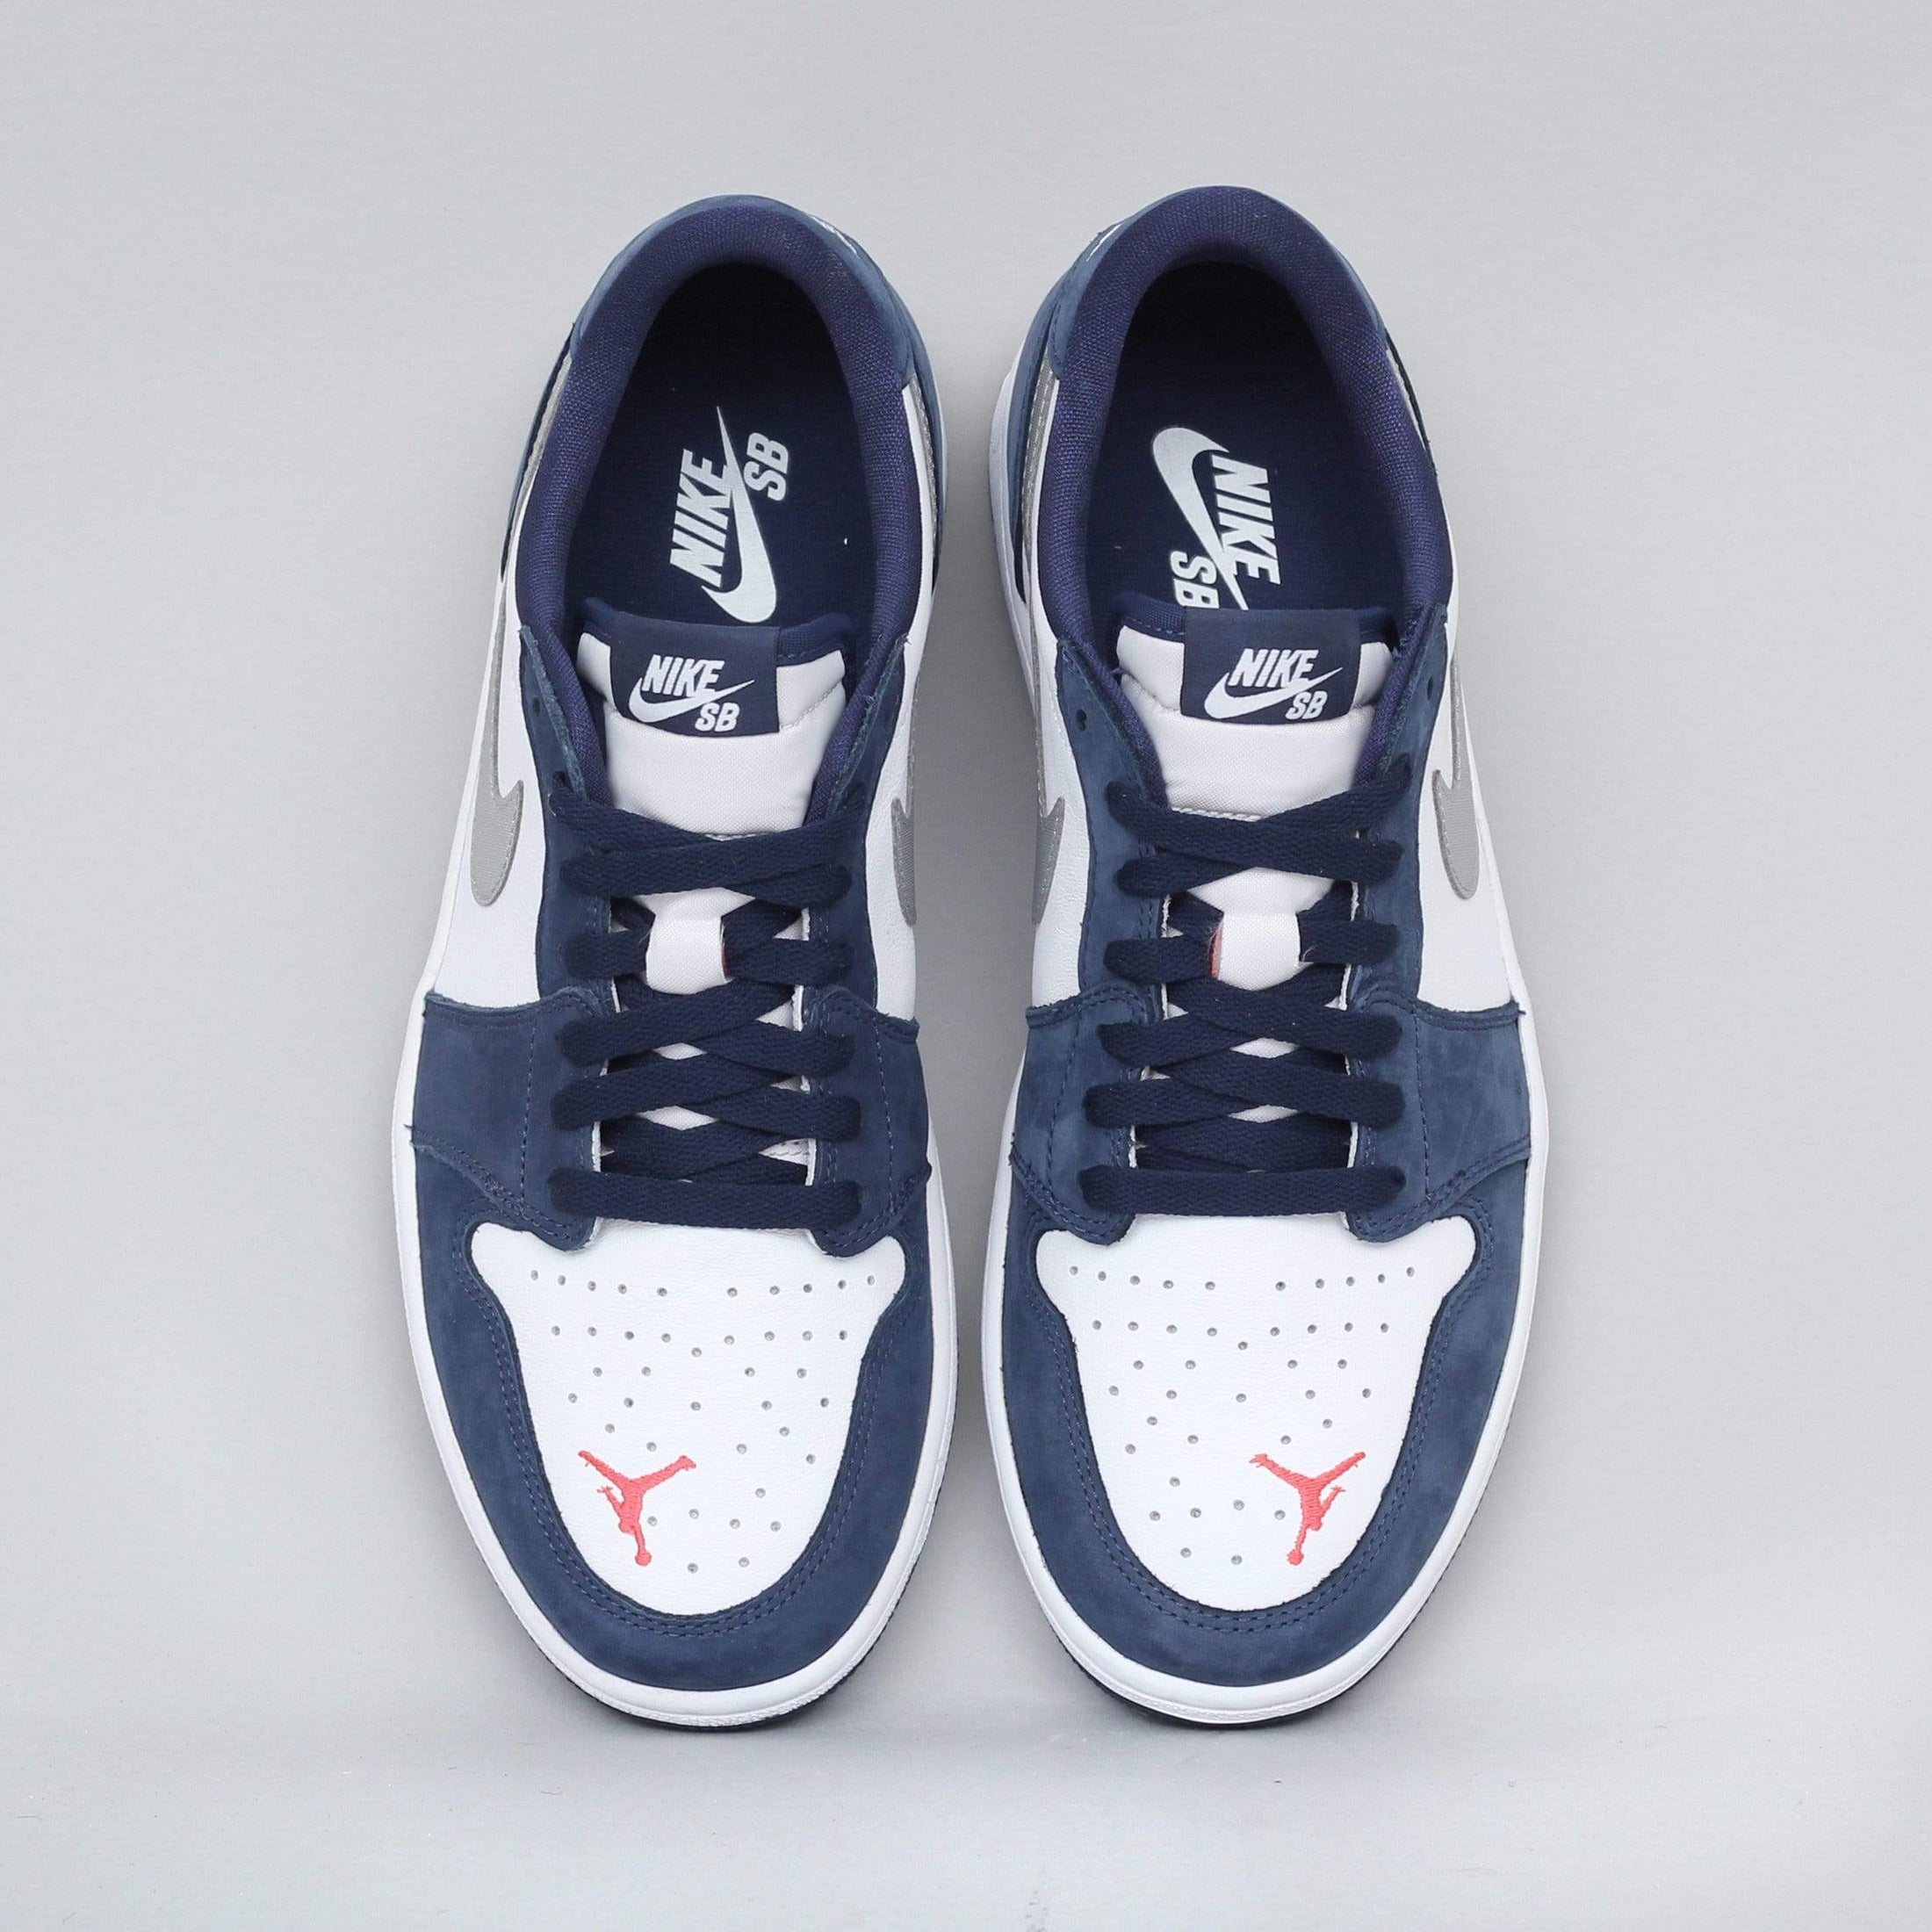 Nike SB Air Jordan 1 Low QS Shoes Midnight Navy / Metallic Silver